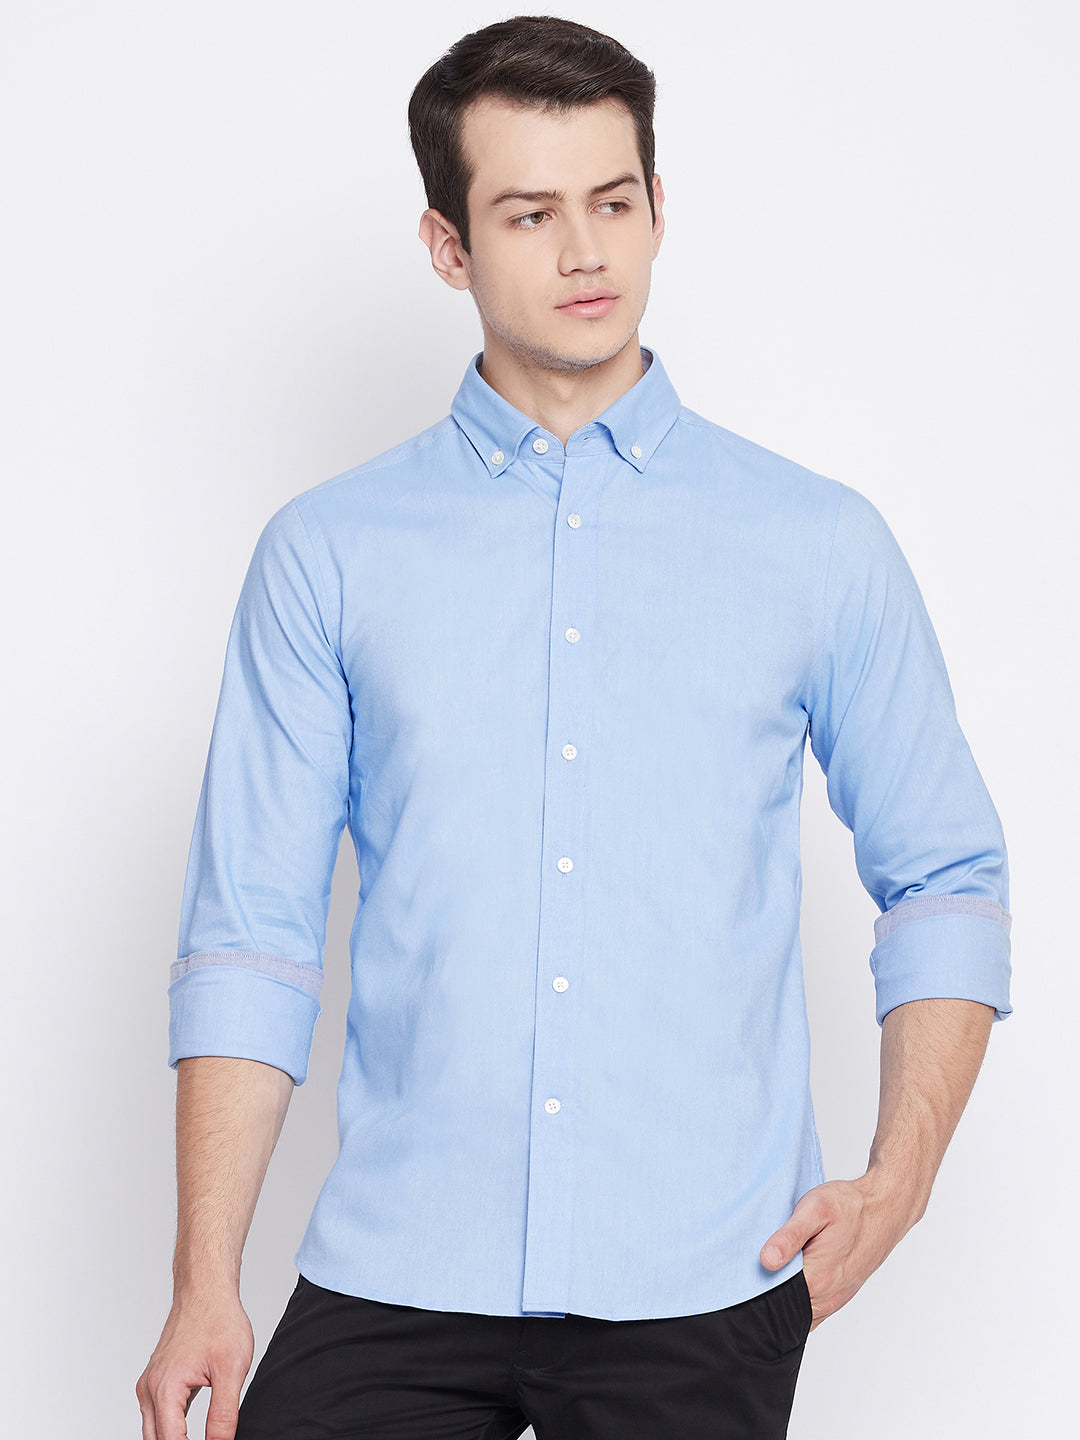 Sky Blue Oxford Cotton Shirt